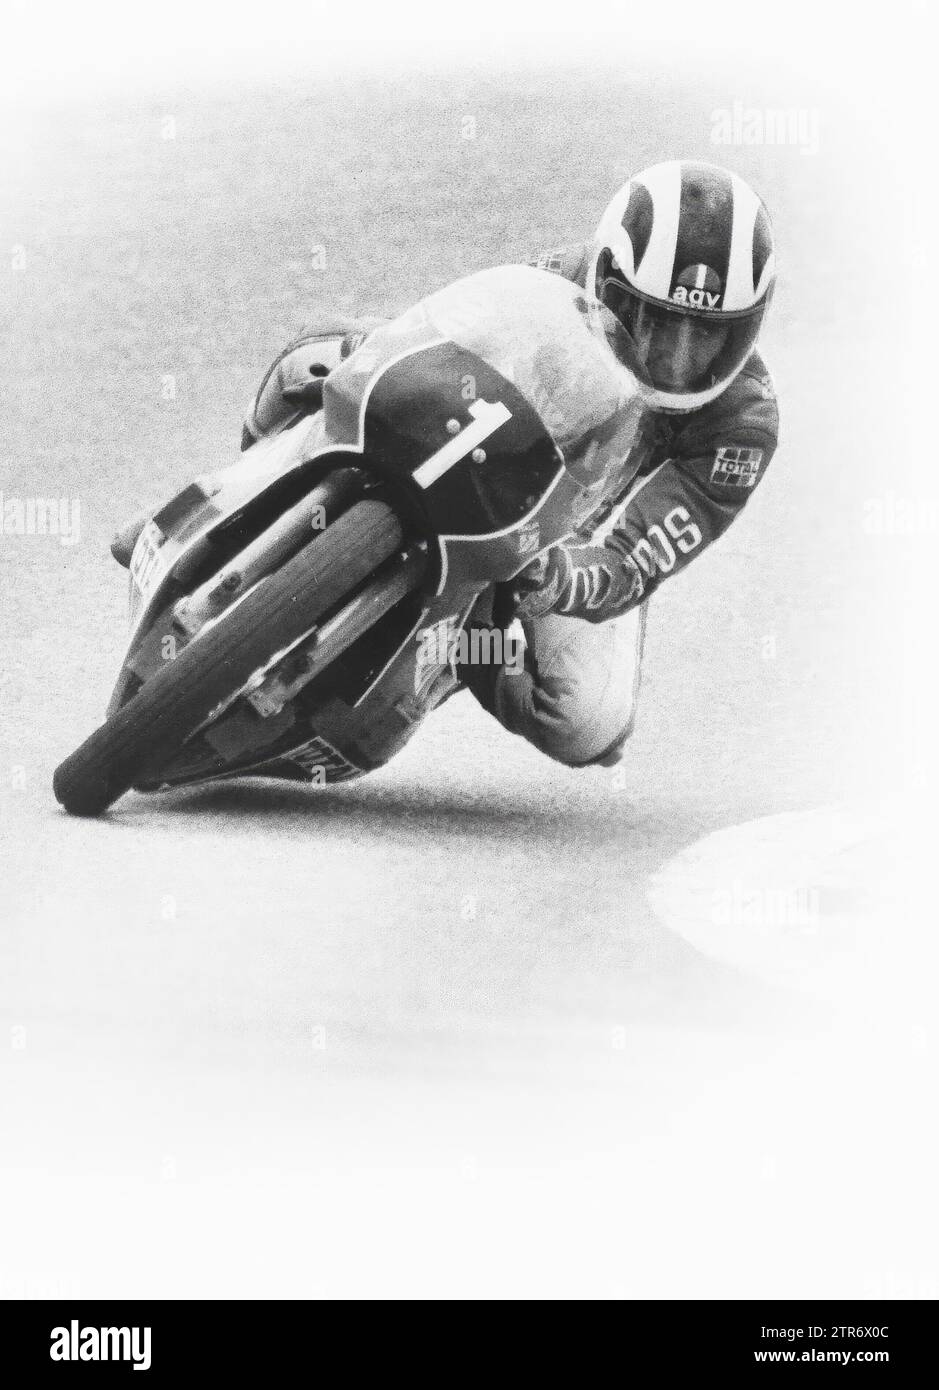 04/30/1980. Ángel Nieto, in a Retrospective image, at the Jarama circuit, when he was a Garelli driver. Credit: Album / Archivo ABC Stock Photo